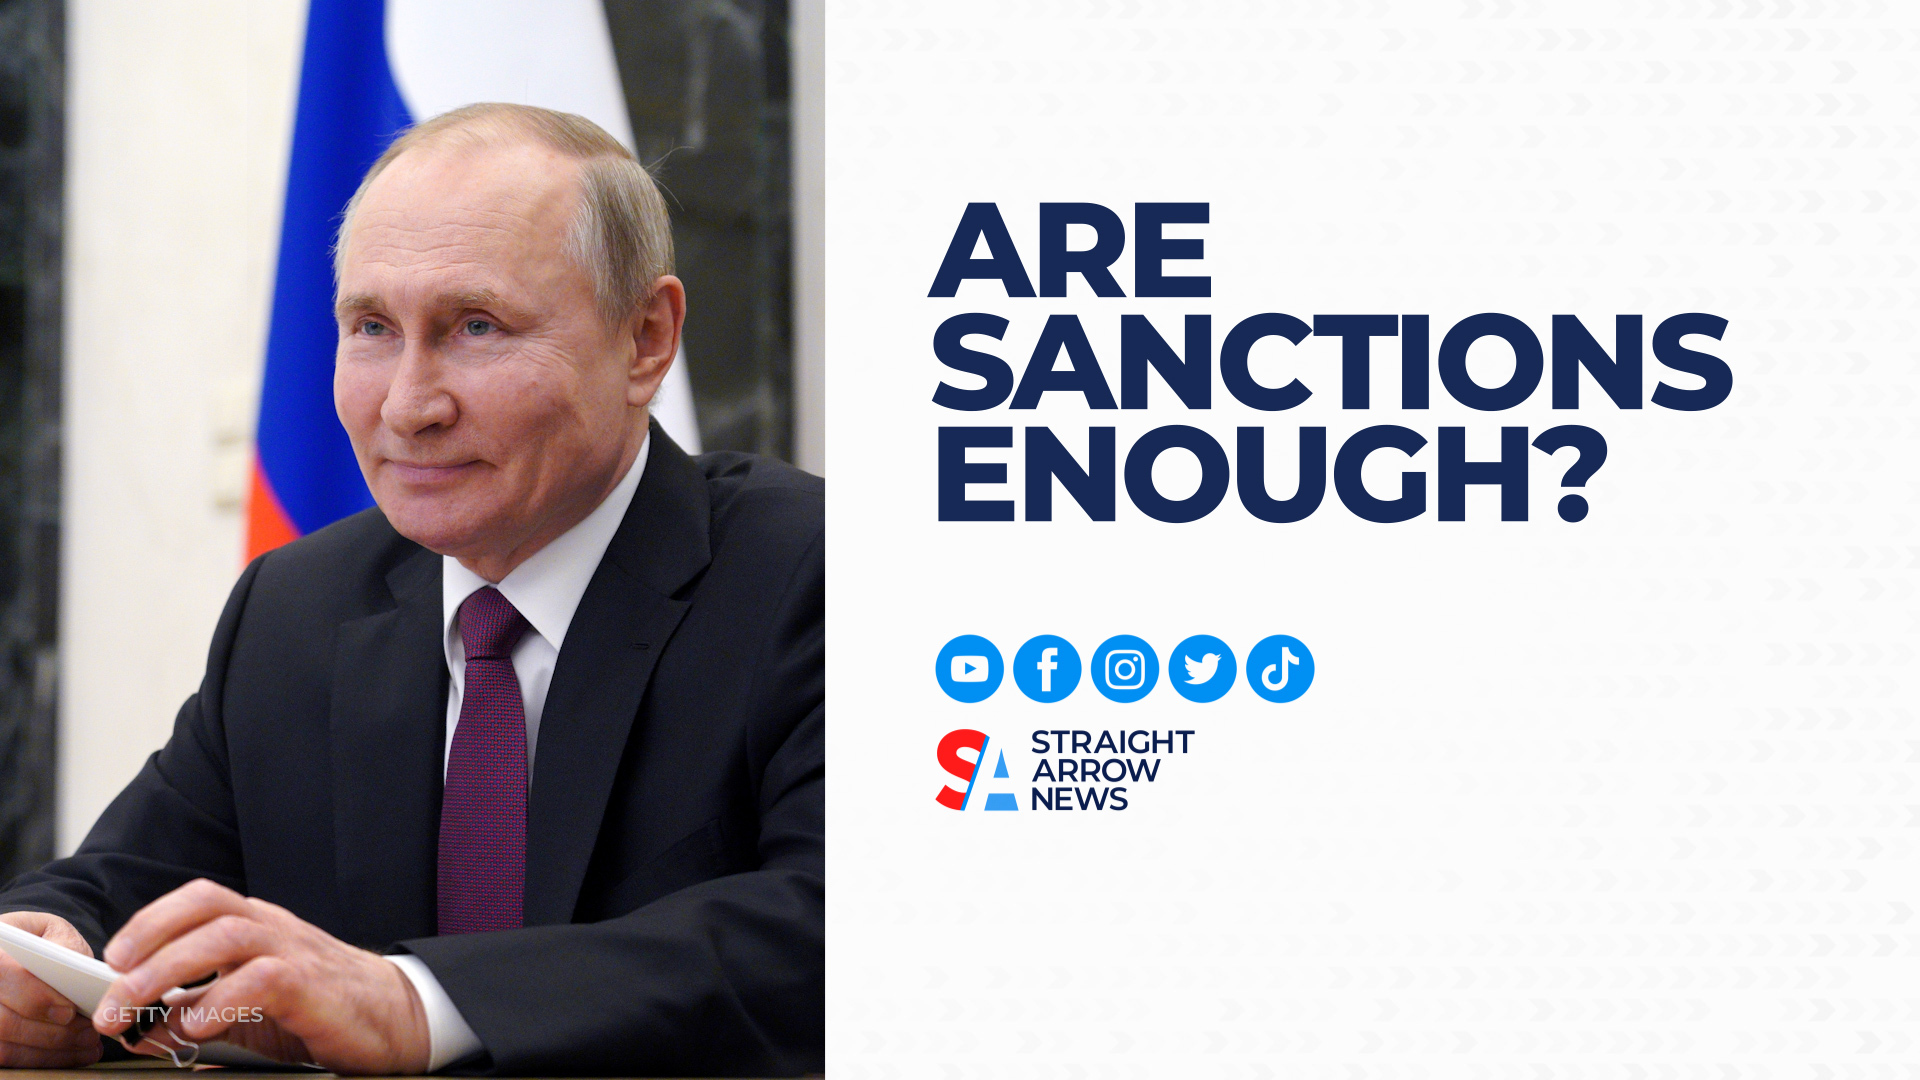 Russia's invasion of Ukraine is underway. Eastern European expert, Ambassador Steven Mann says sanctions are not enough.